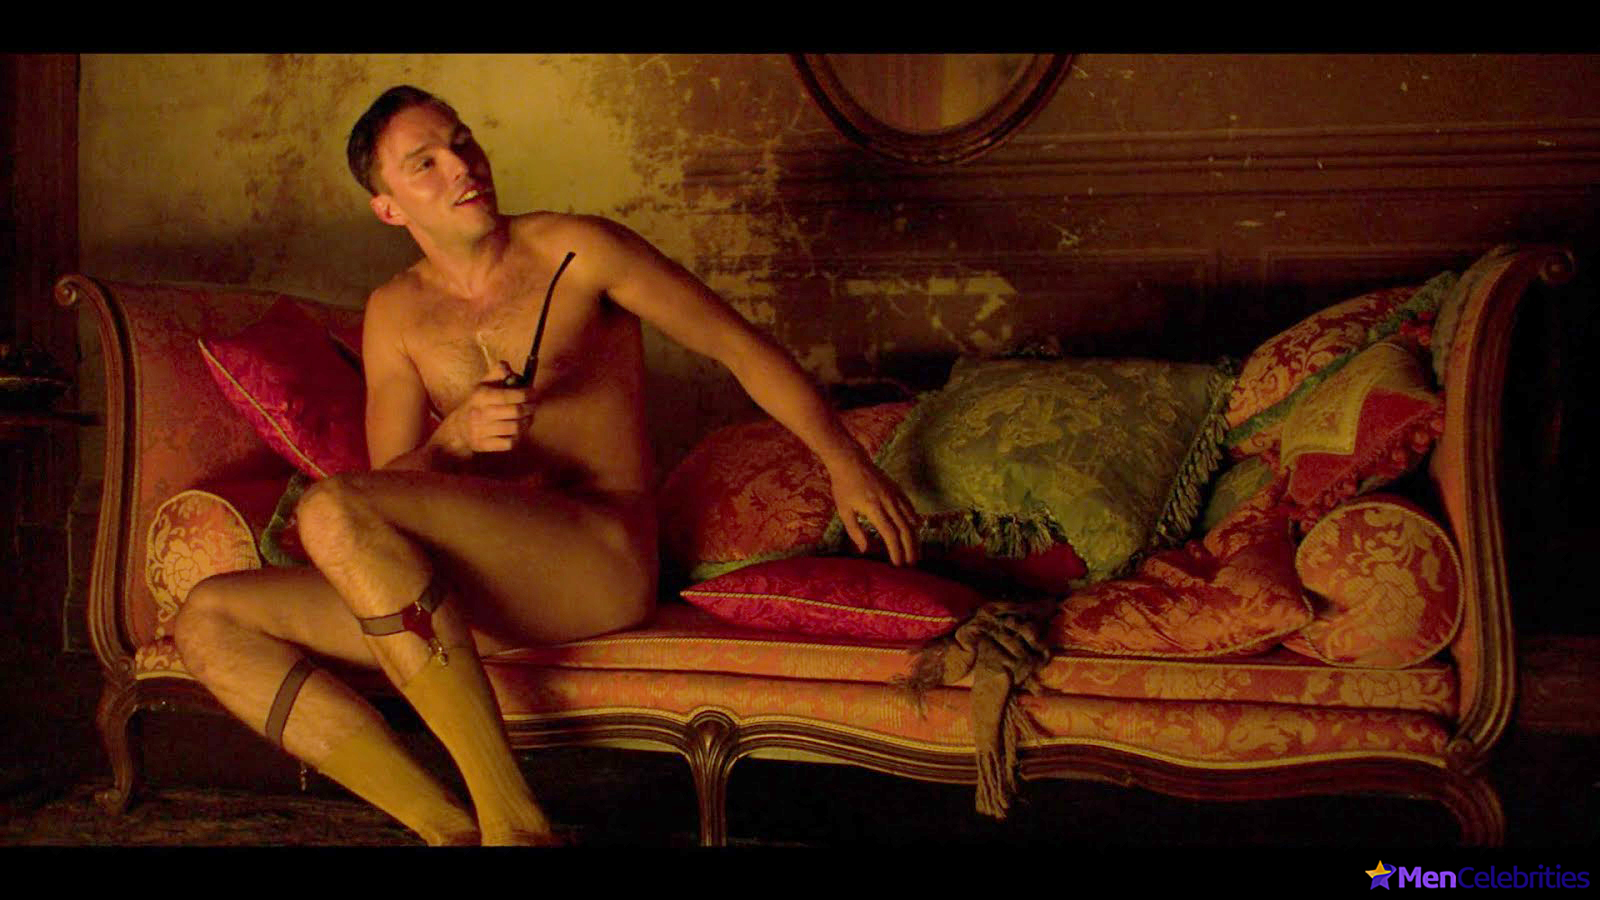 Nicholas Hoult nude movie scenes.